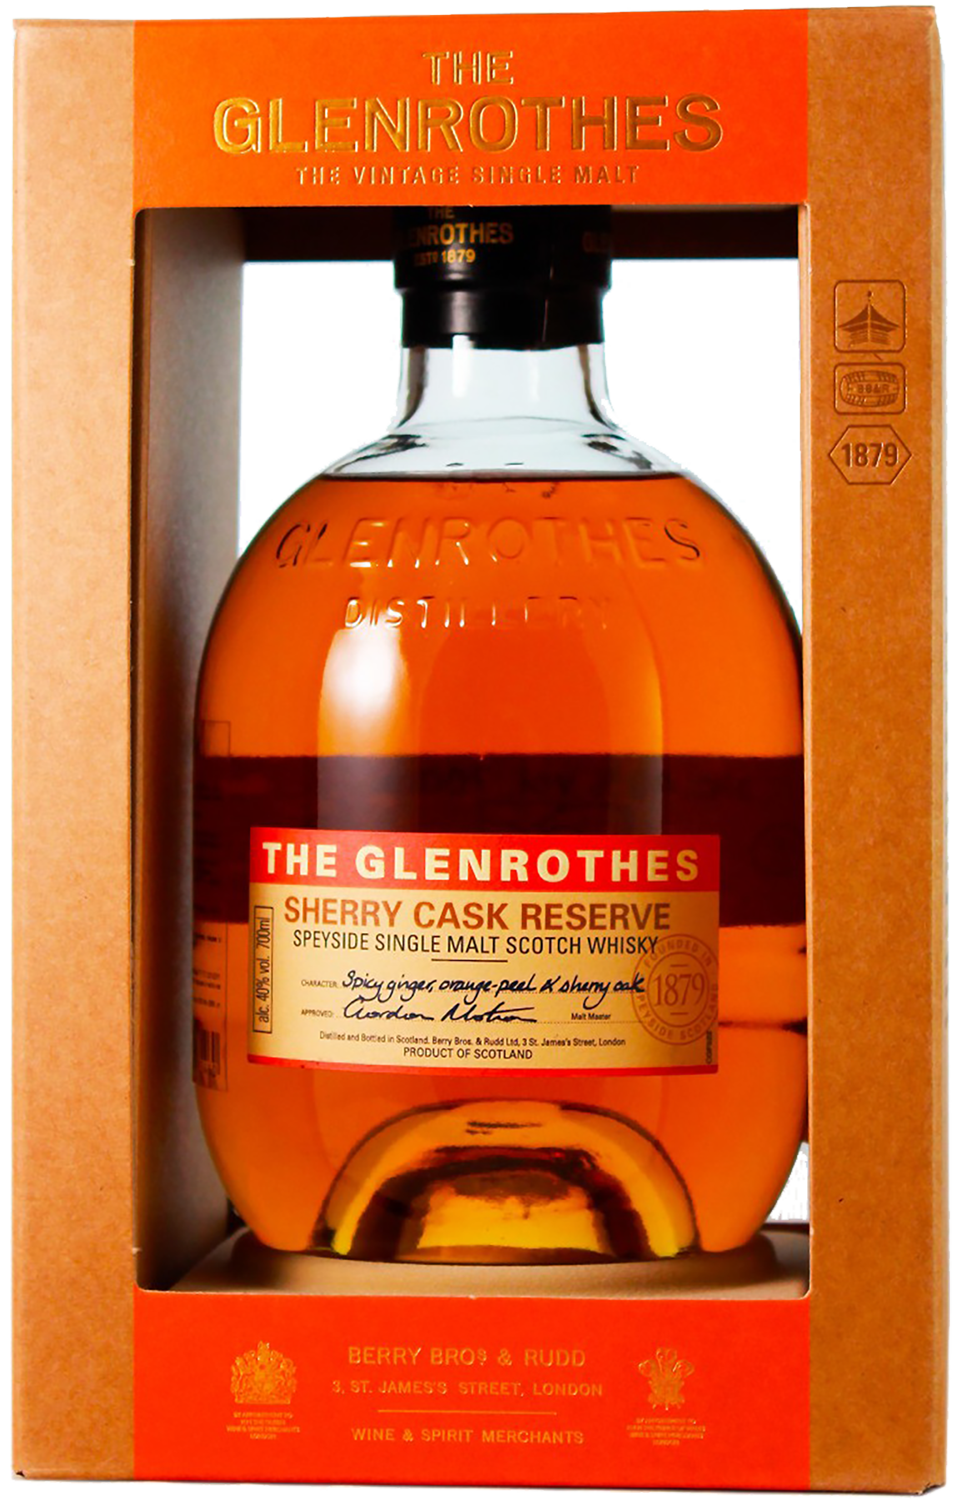 The Glenrothes Sherry Cask Reserve Speyside Single Malt Scotch Whisky(gift box) mossburn vintage casks no 26 glenrothes single malt scotch whisky gift box